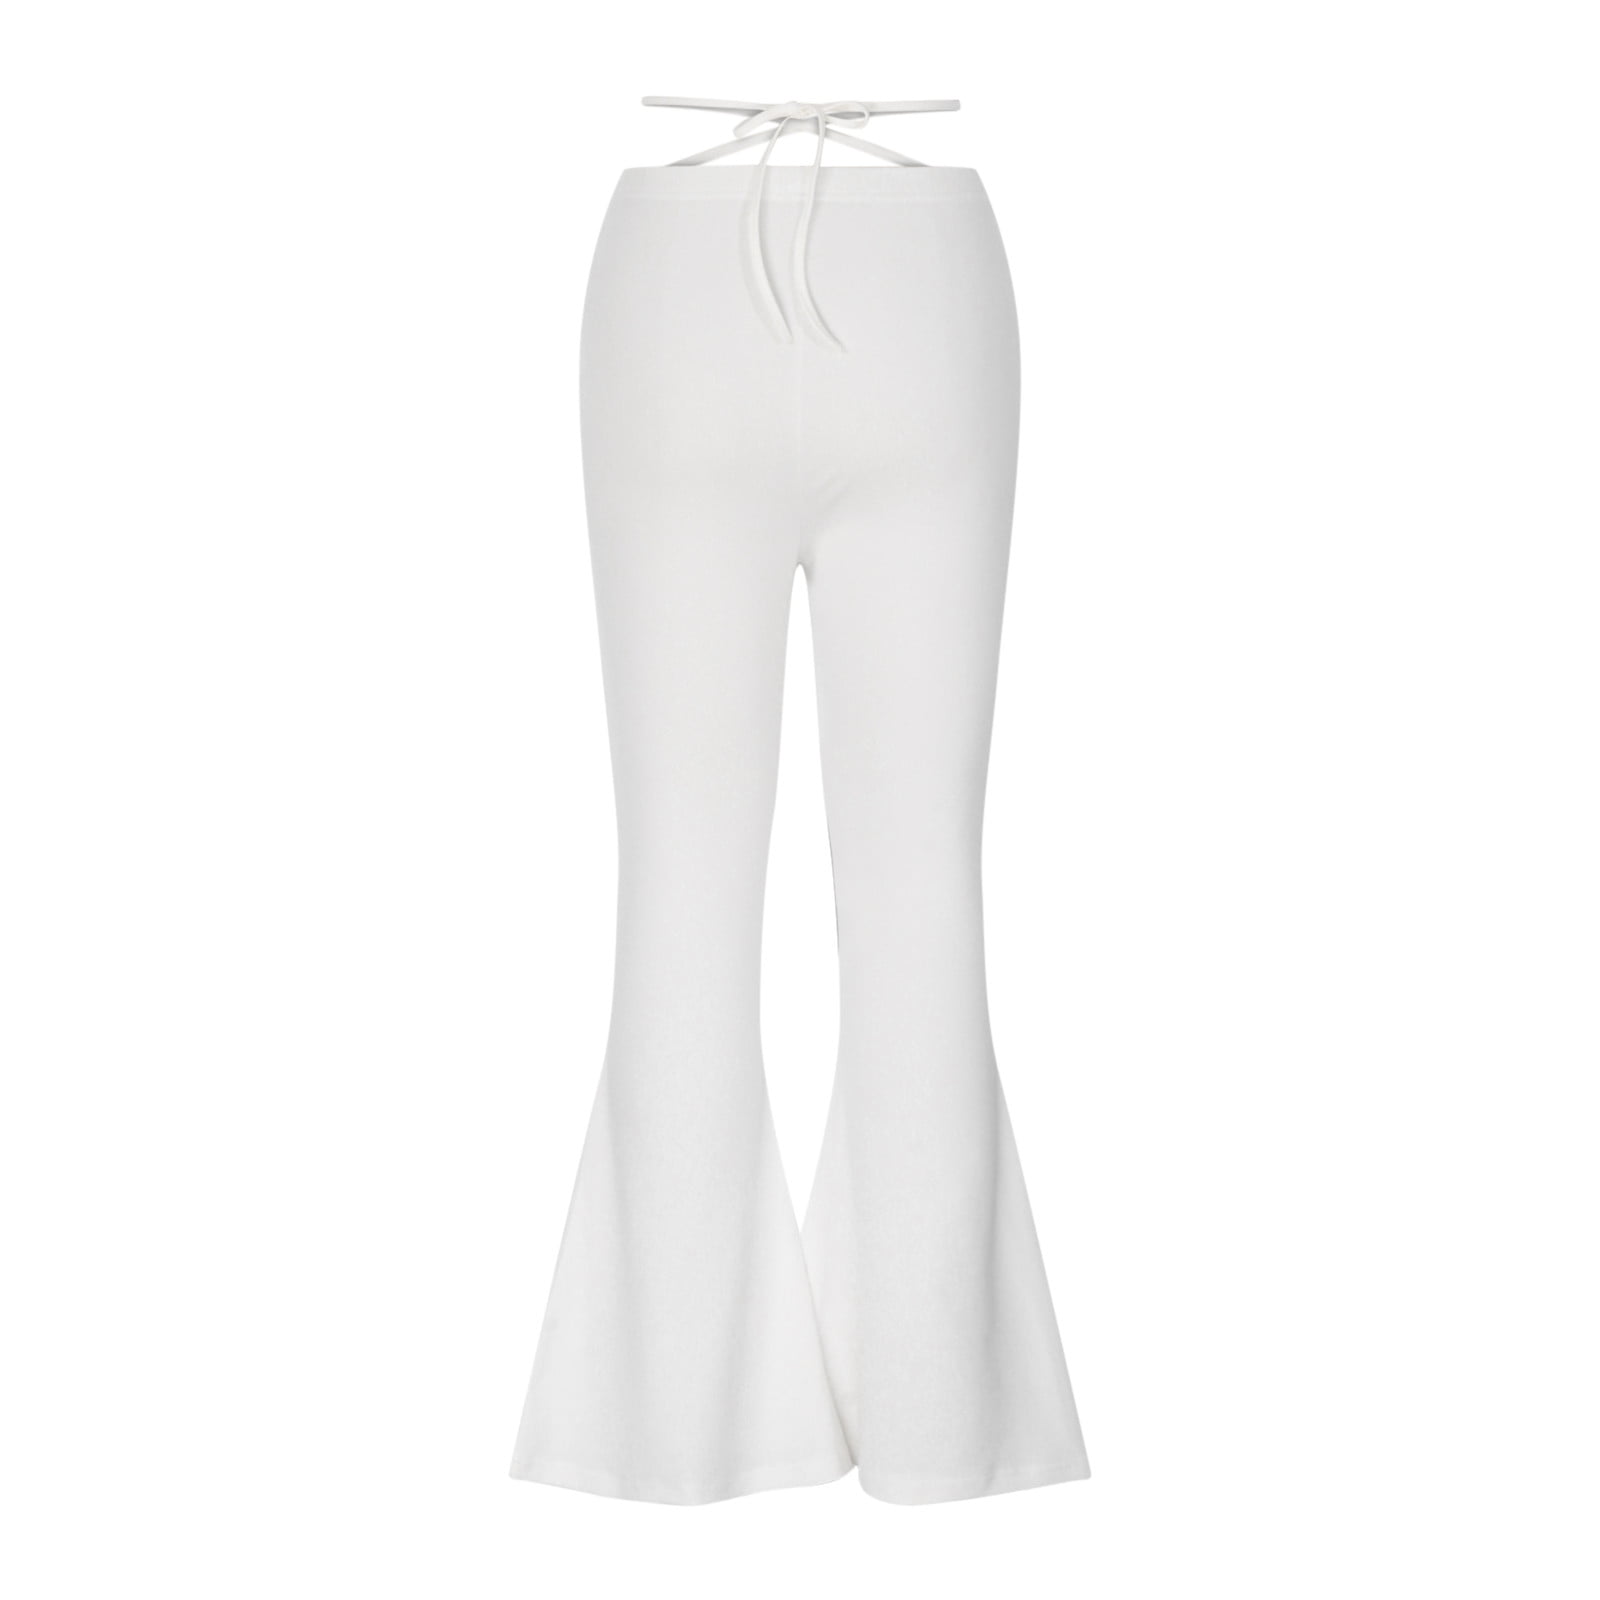 GAOKE High Waist Flare Pants For Women White Bell South Bottom, Slim Fit,  Elegant Work Wear From Lp2228, $15.6